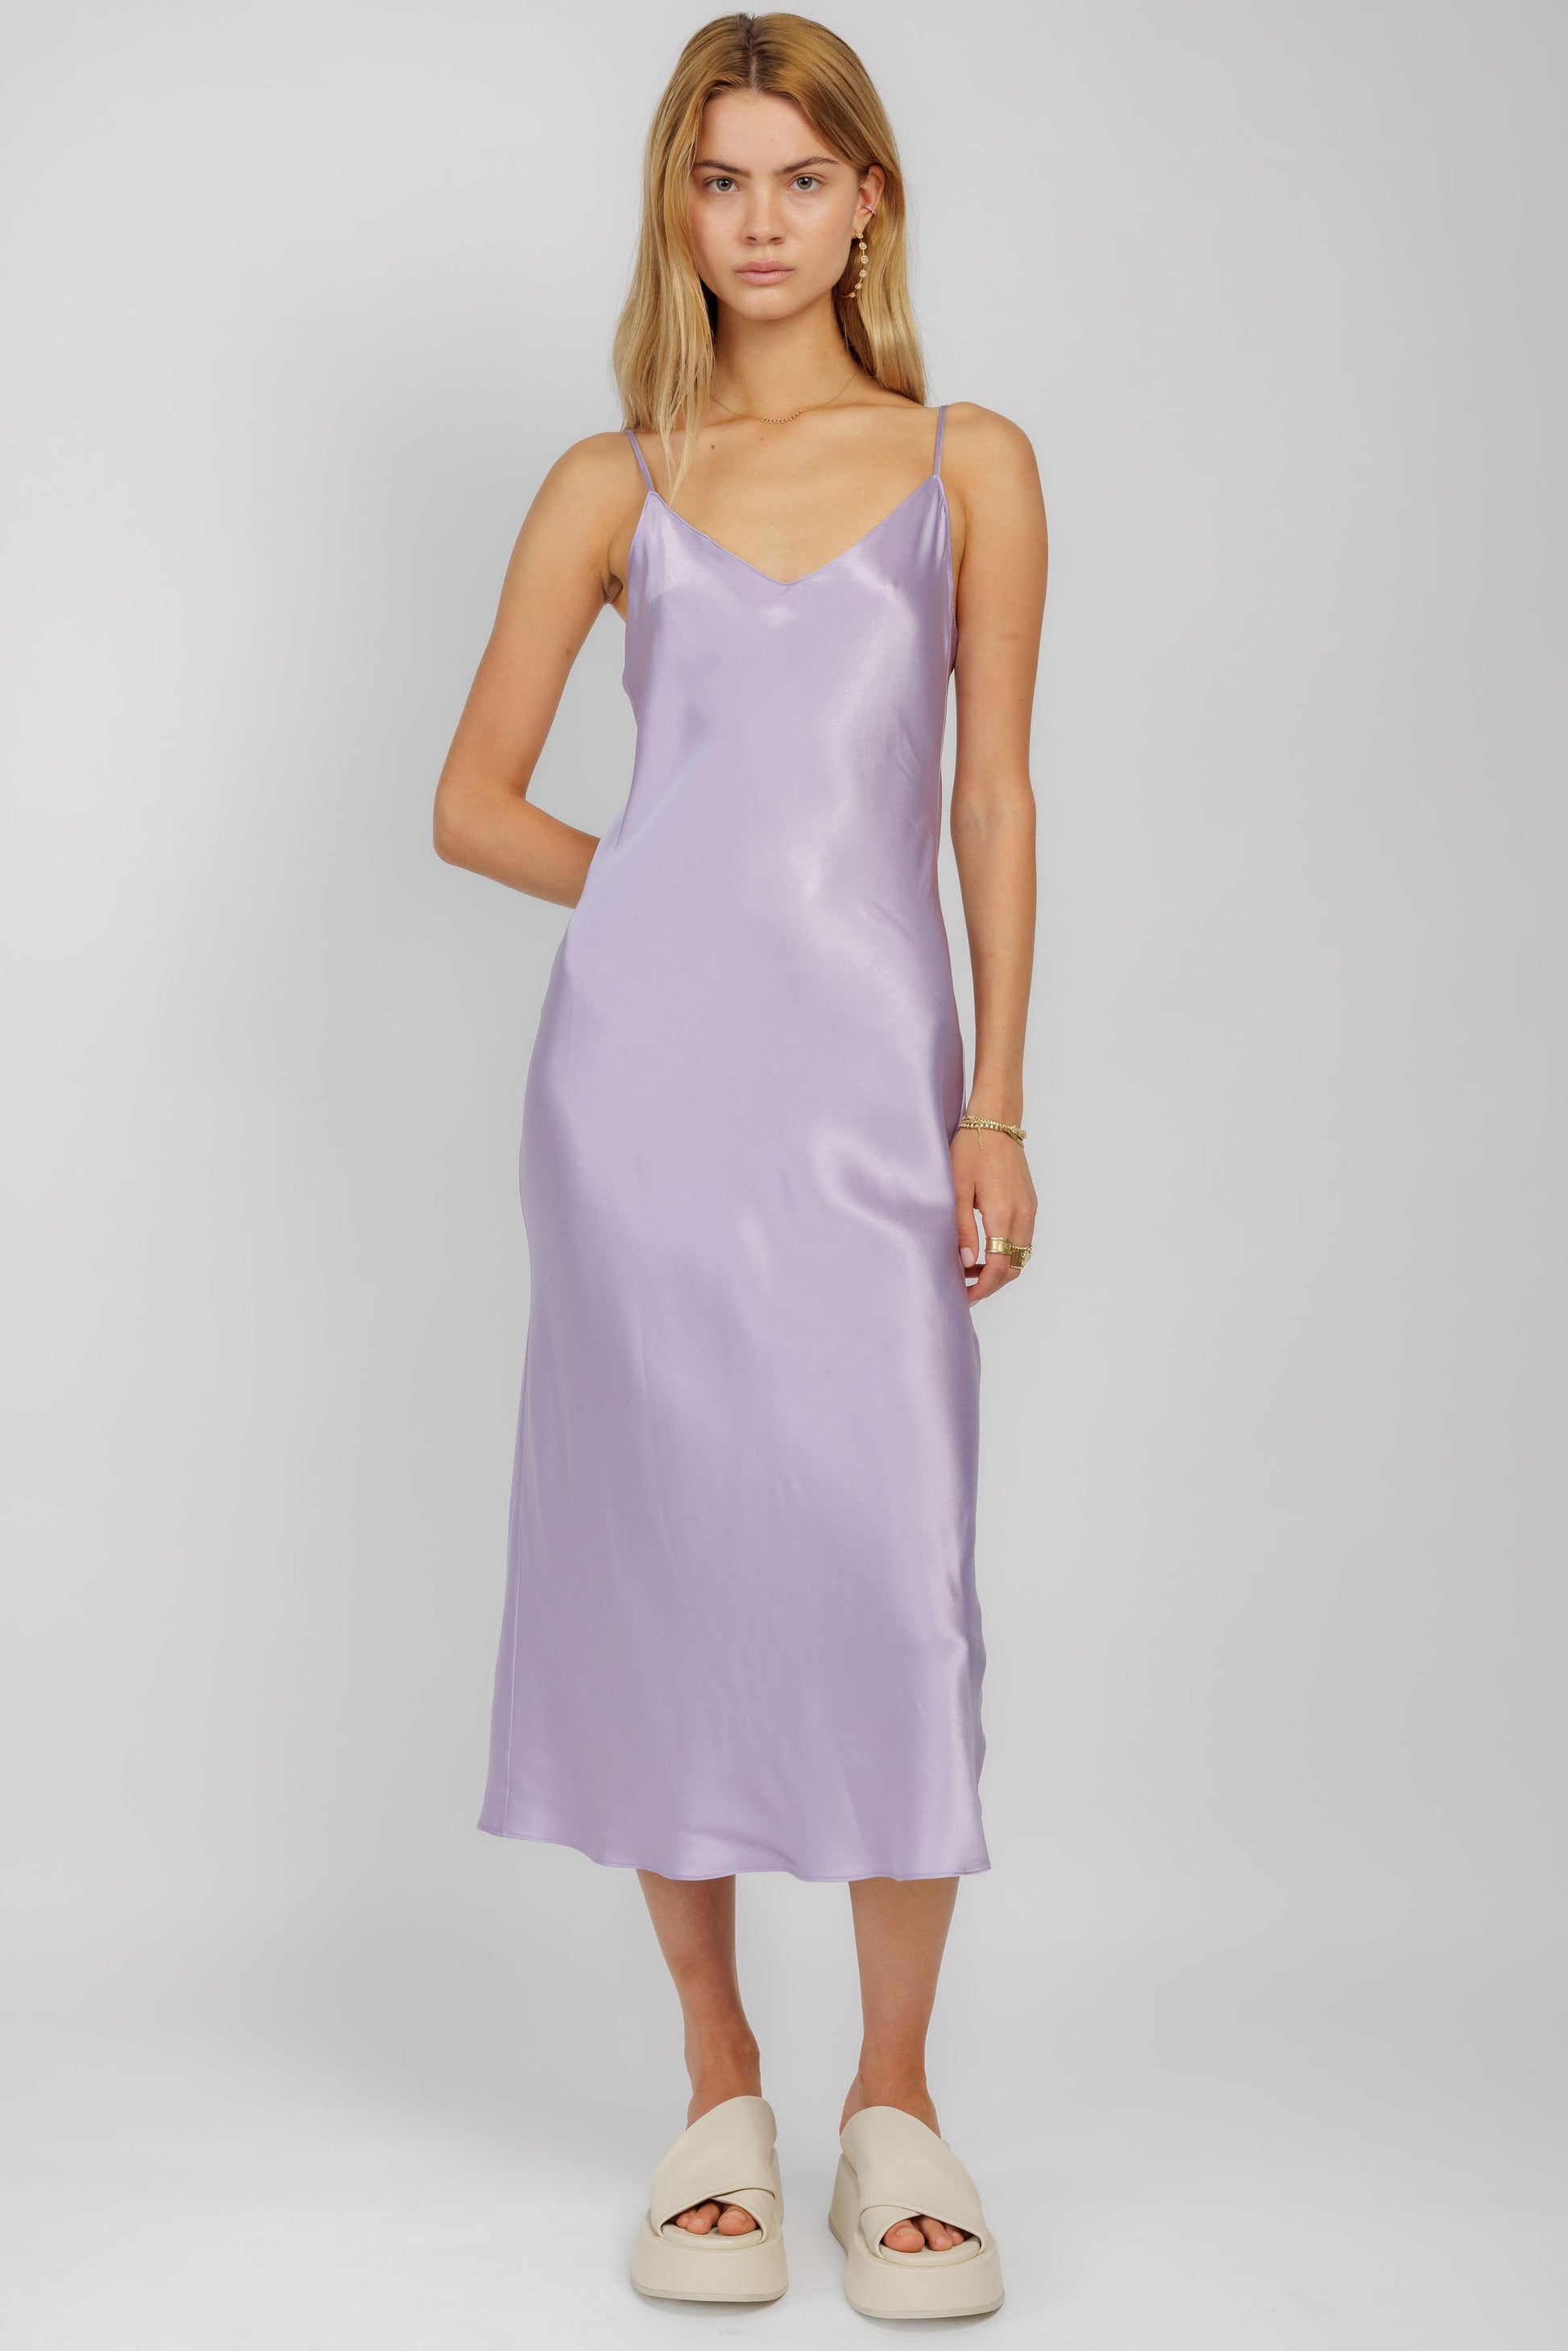 SABLYN Taylor Silk Slip Dress in Prism